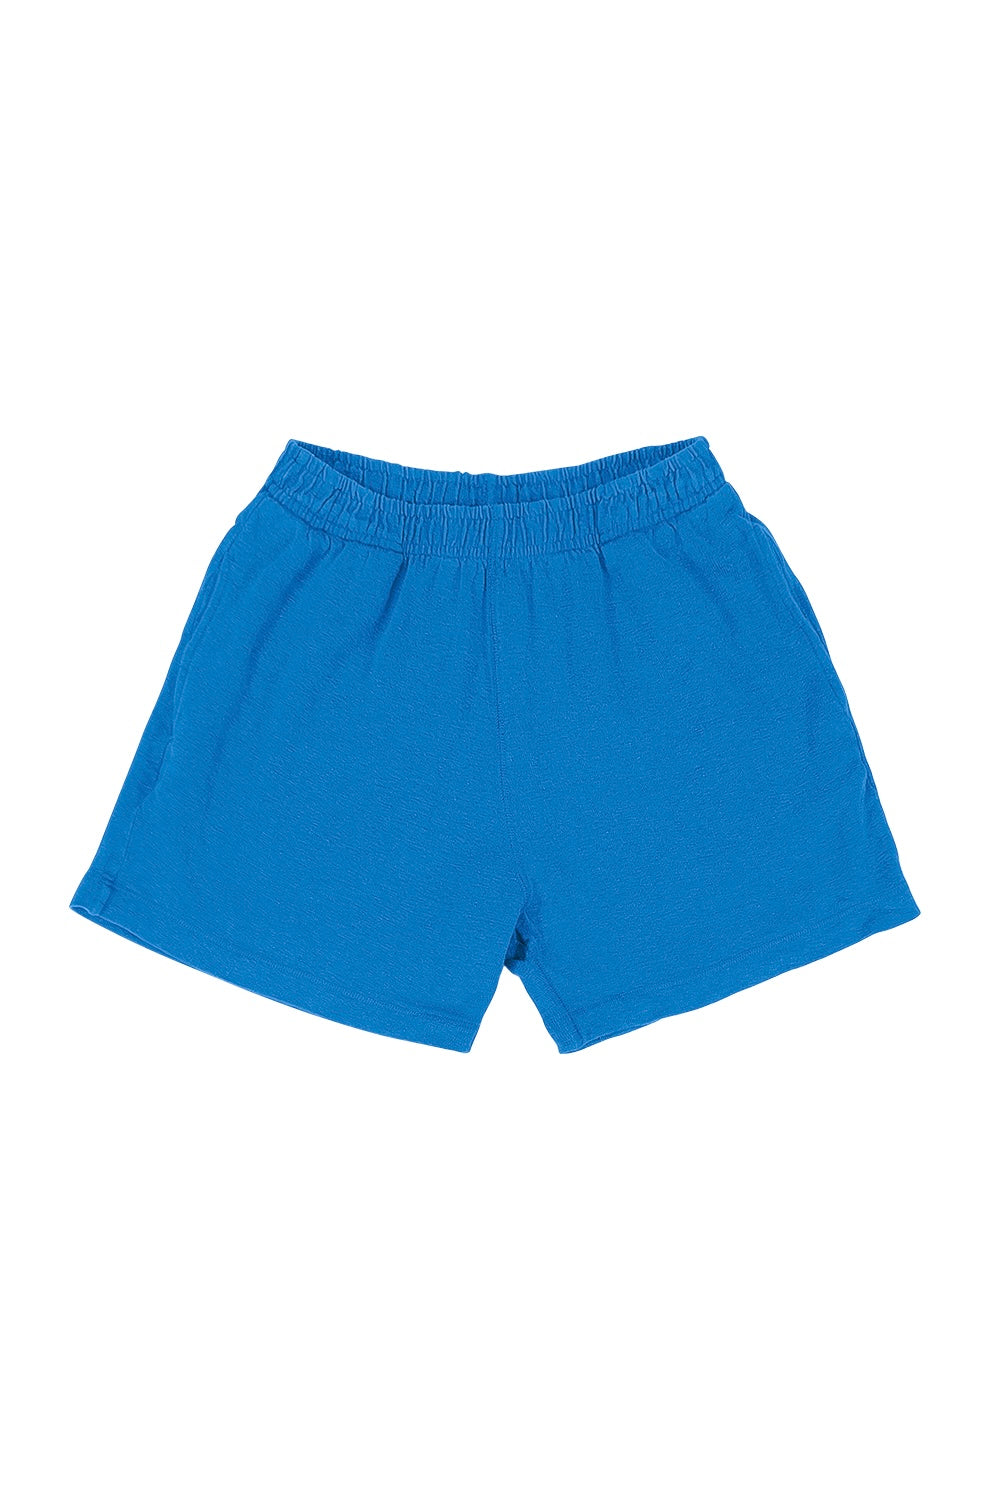 Kona 100% Hemp Short | Jungmaven Hemp Clothing & Accessories / Color: Galaxy Blue